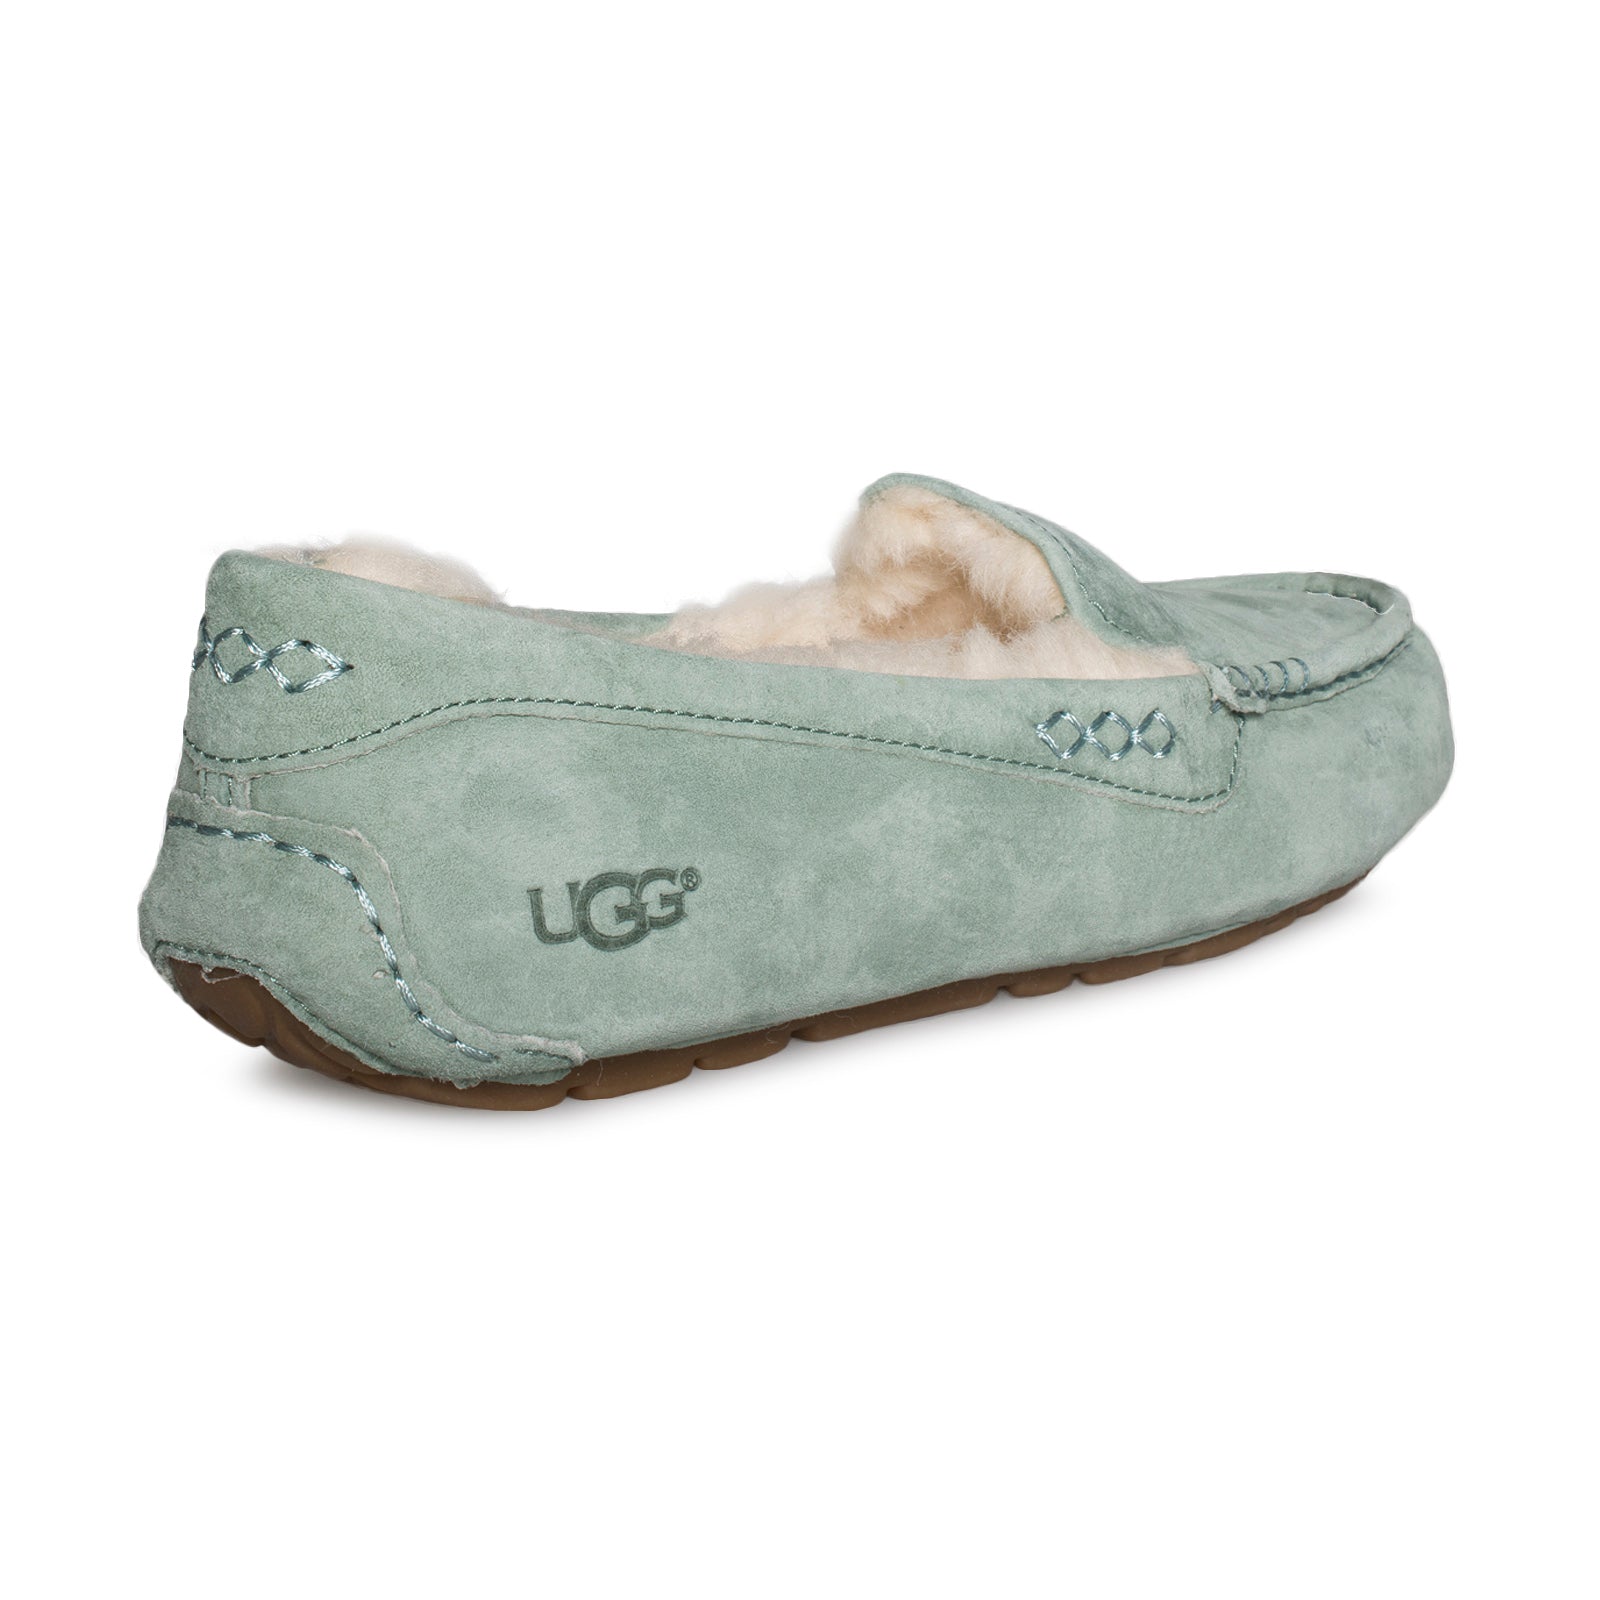 ugg ansley slippers sea green